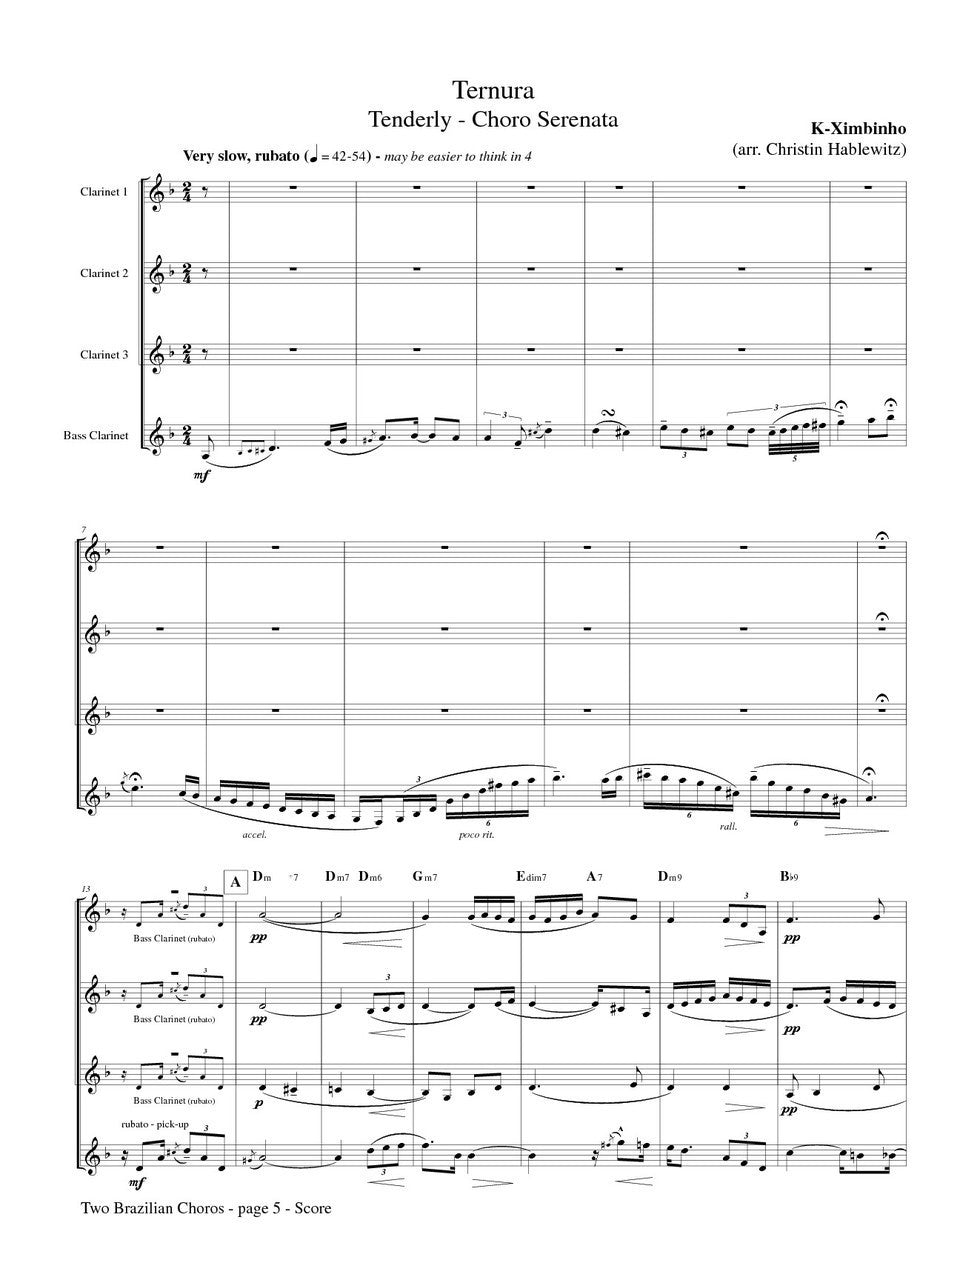 Pecci/K-Ximbinho (arr. Christin Hablewitz) - Two Brazilian Choros - Meu Beguin and Ternura for Clarinet Quartet